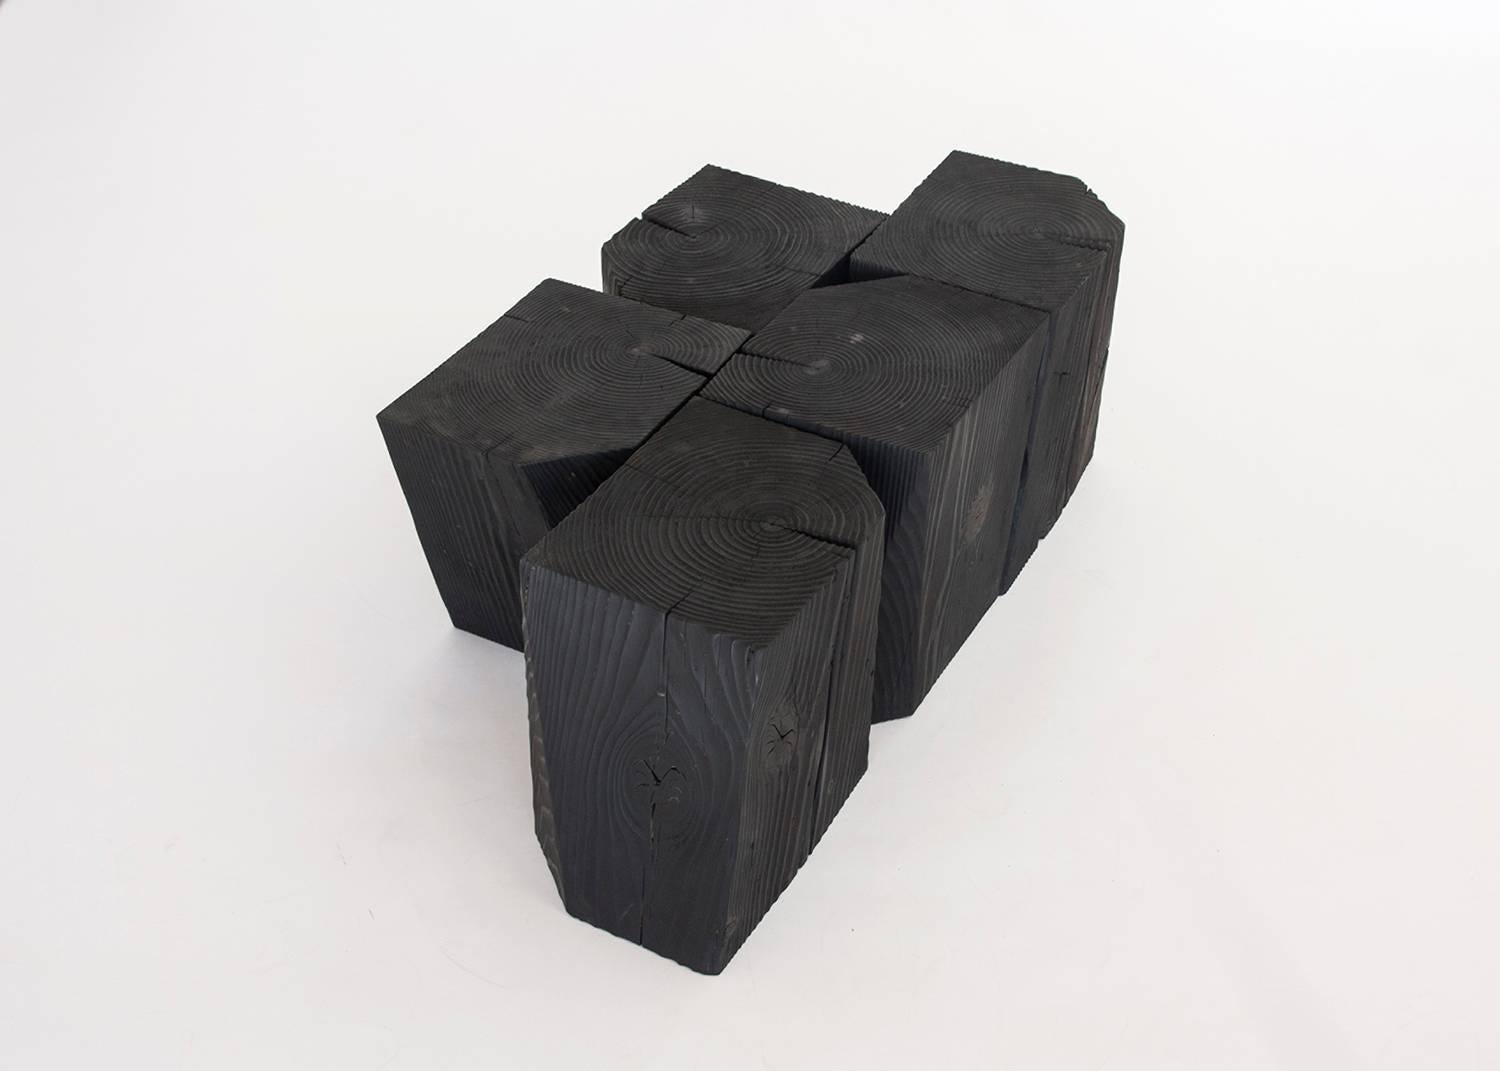 Wood Customization for Sarah, Charcoal Blocks, Sculptural, Geometric, Tables